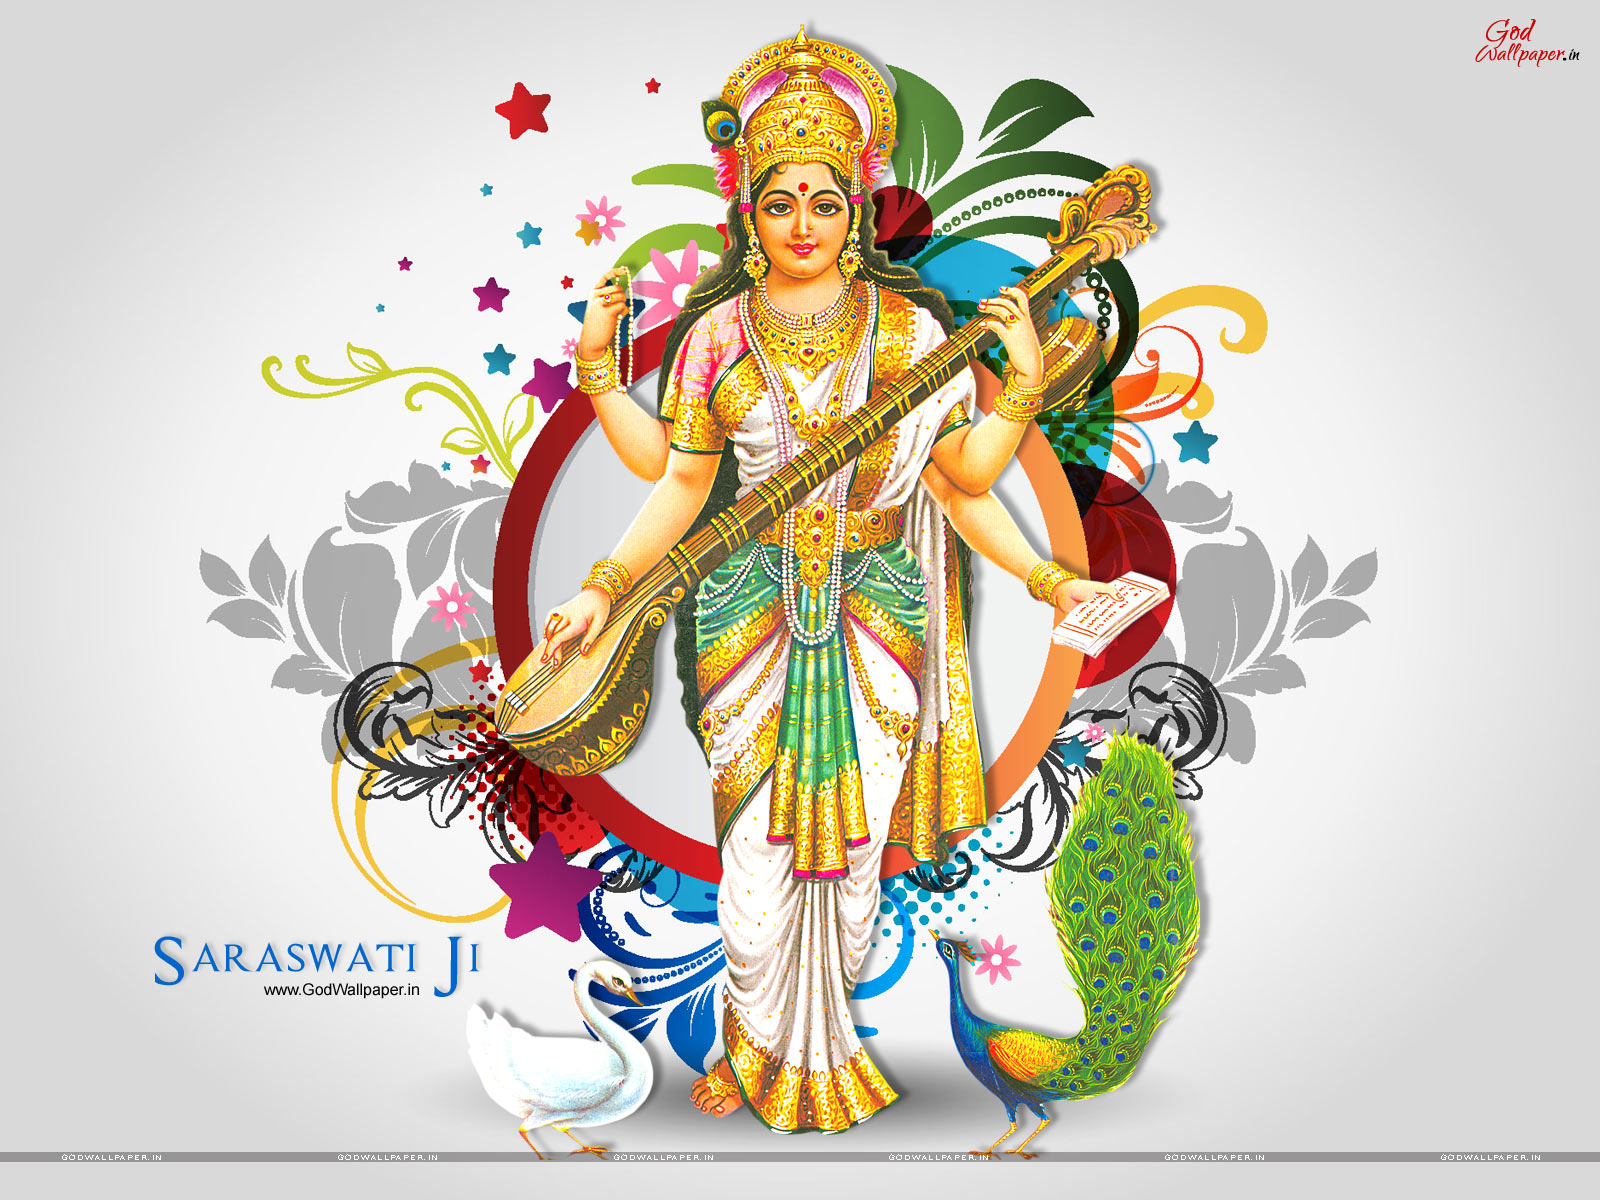 Saraswati Ji Wallpaper Free Download